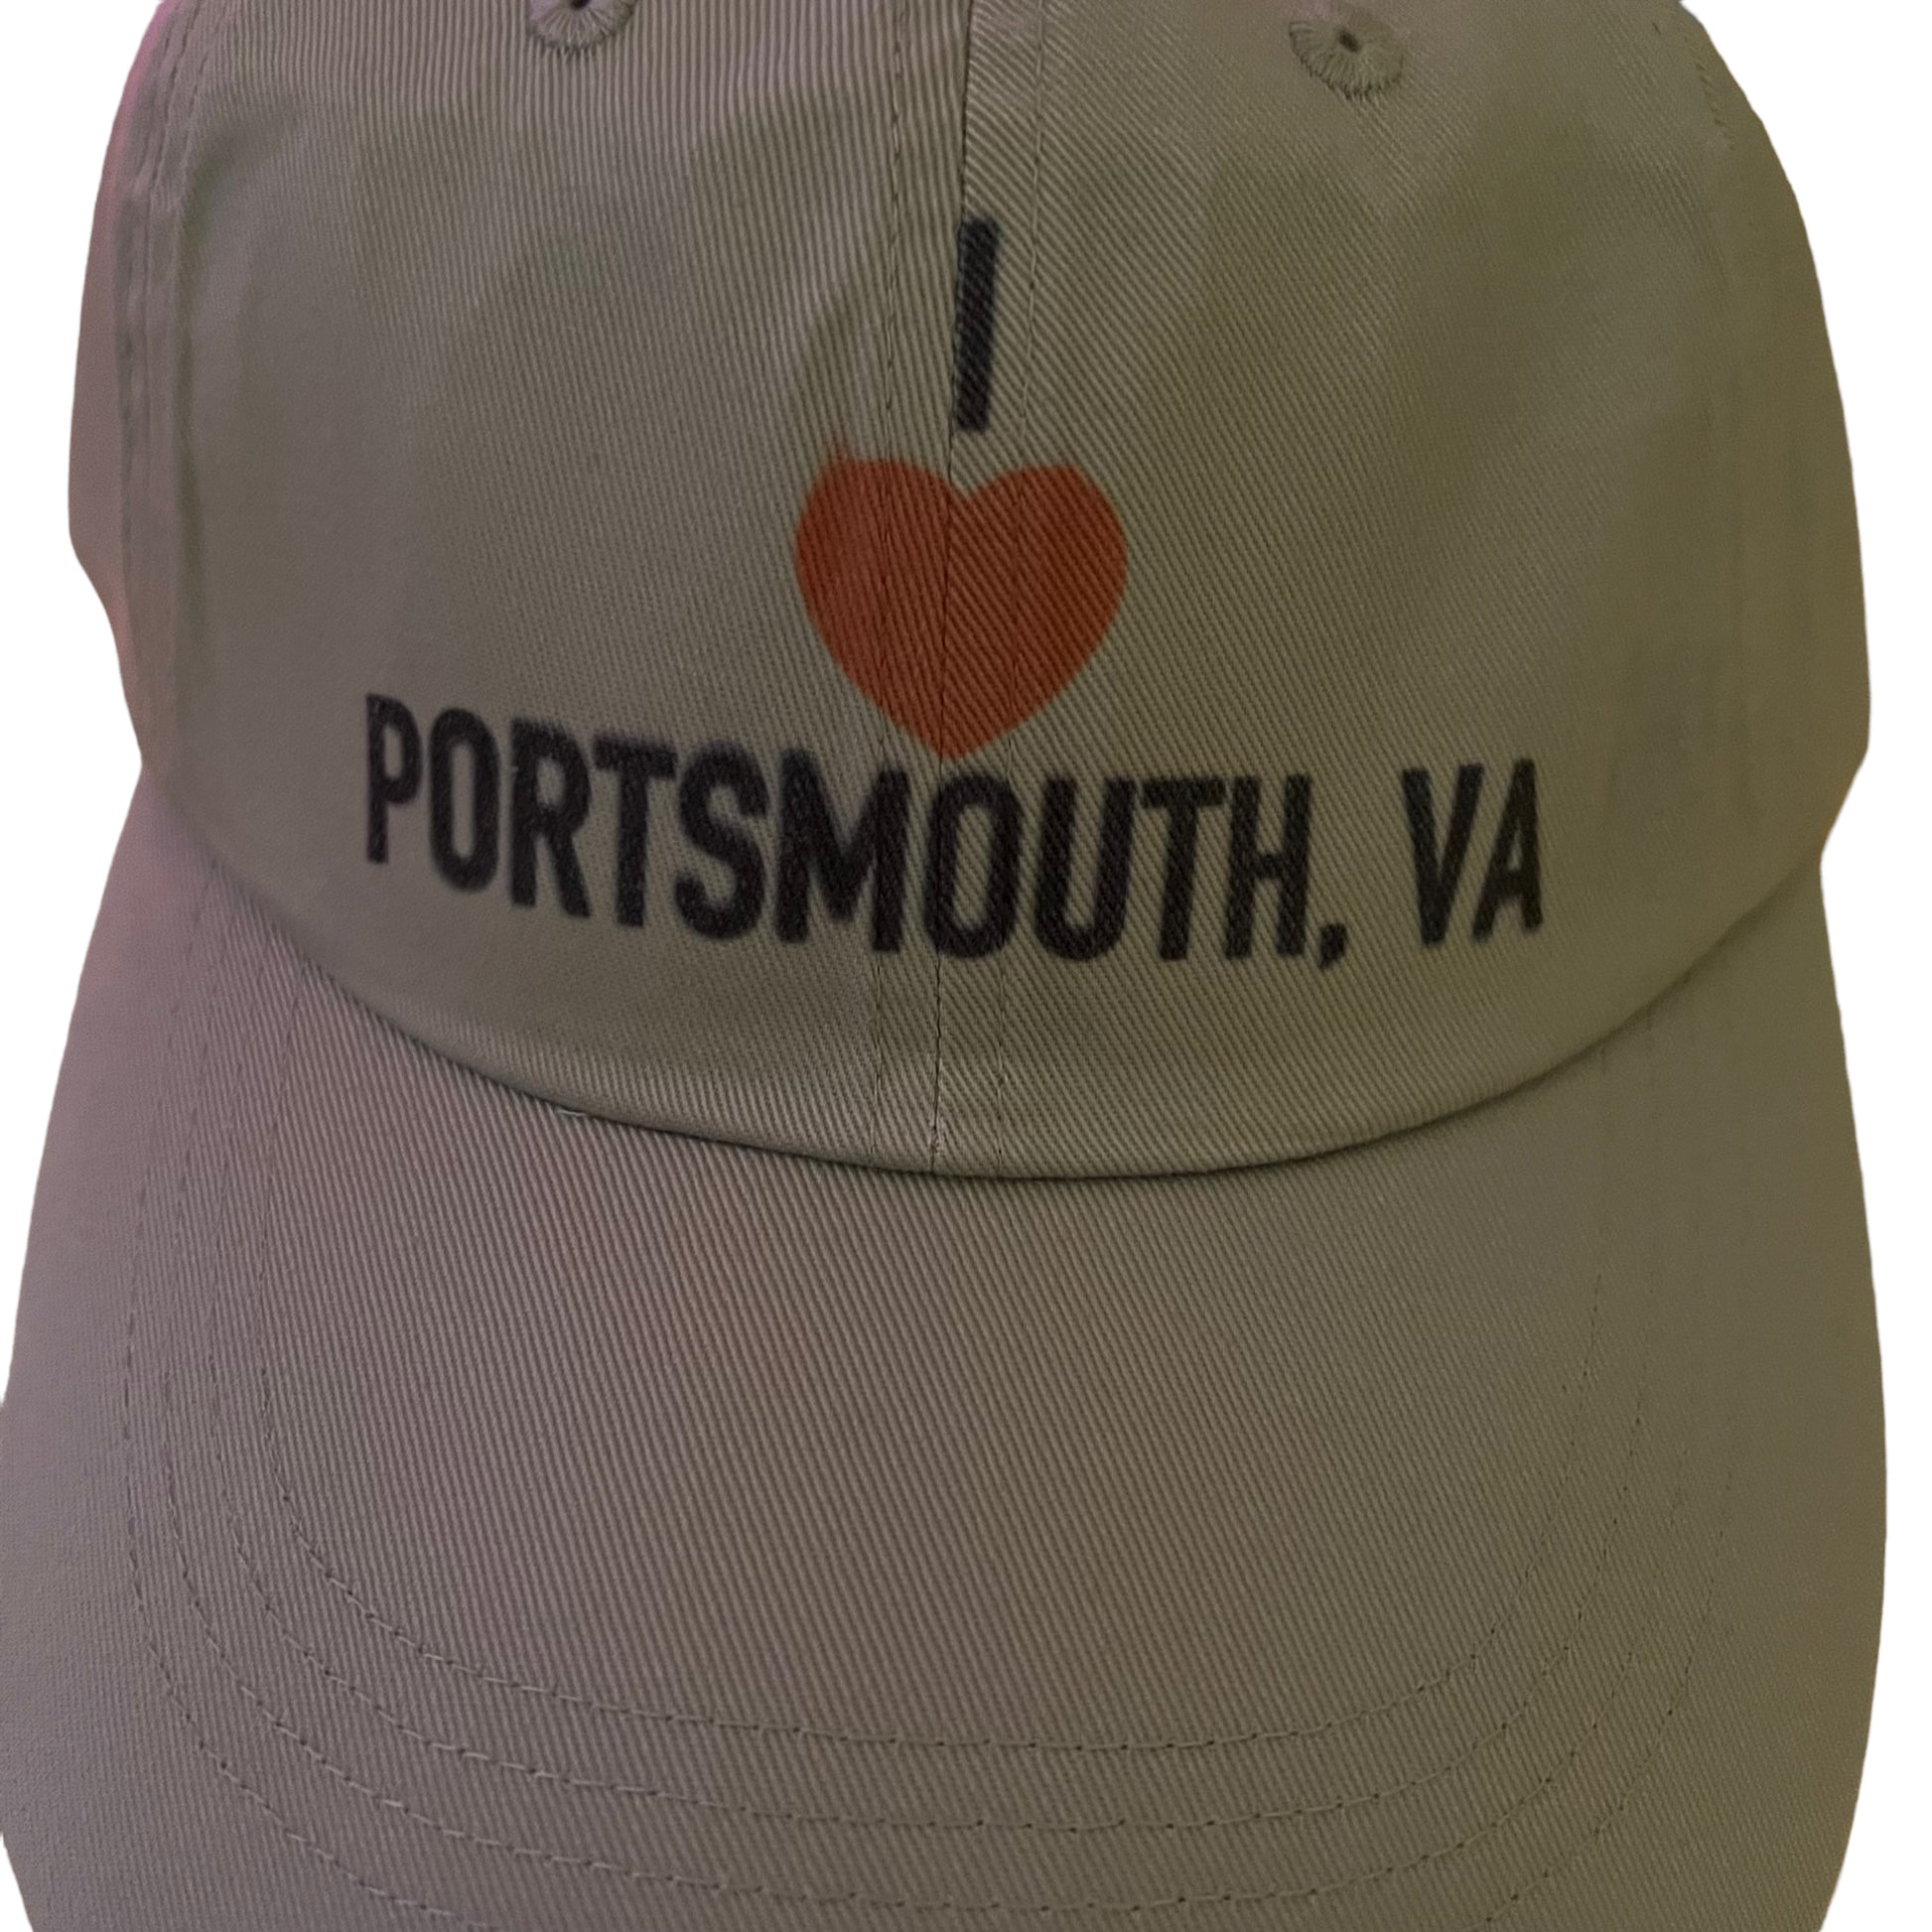 JenDore Gray " I Love Portsmouth" Hat Cap